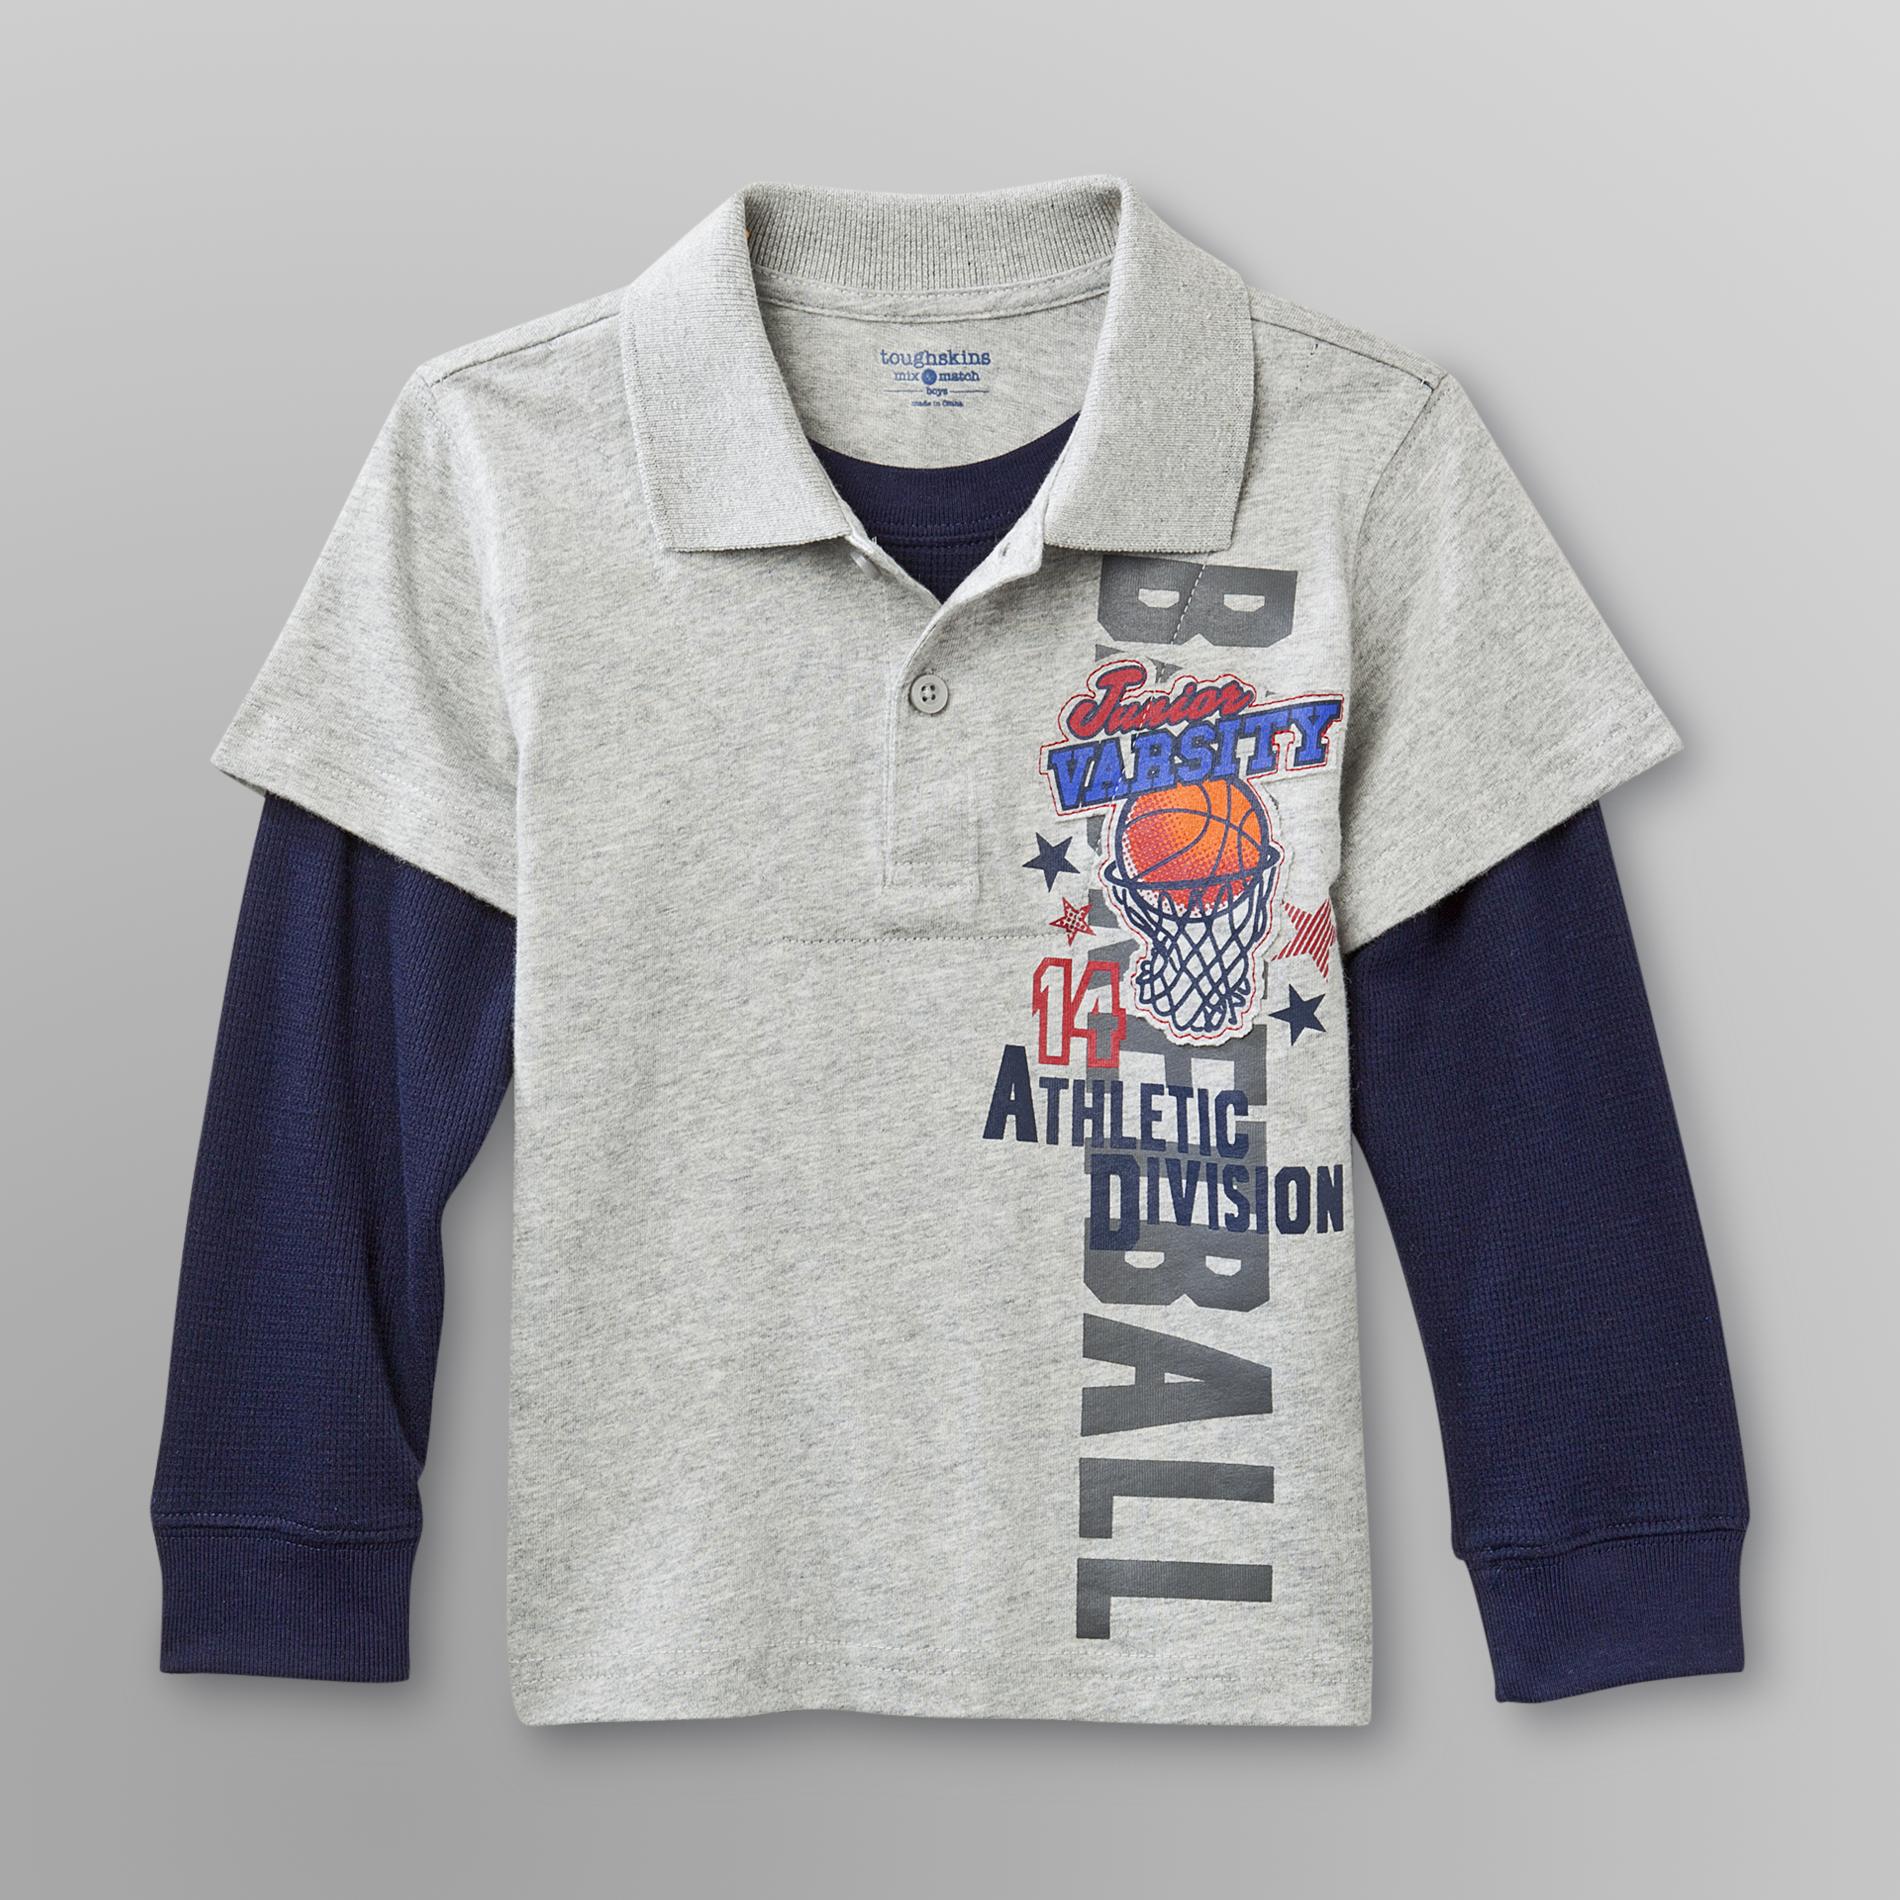 Toughskins Boy's Layered Look Polo Shirt - Basketball